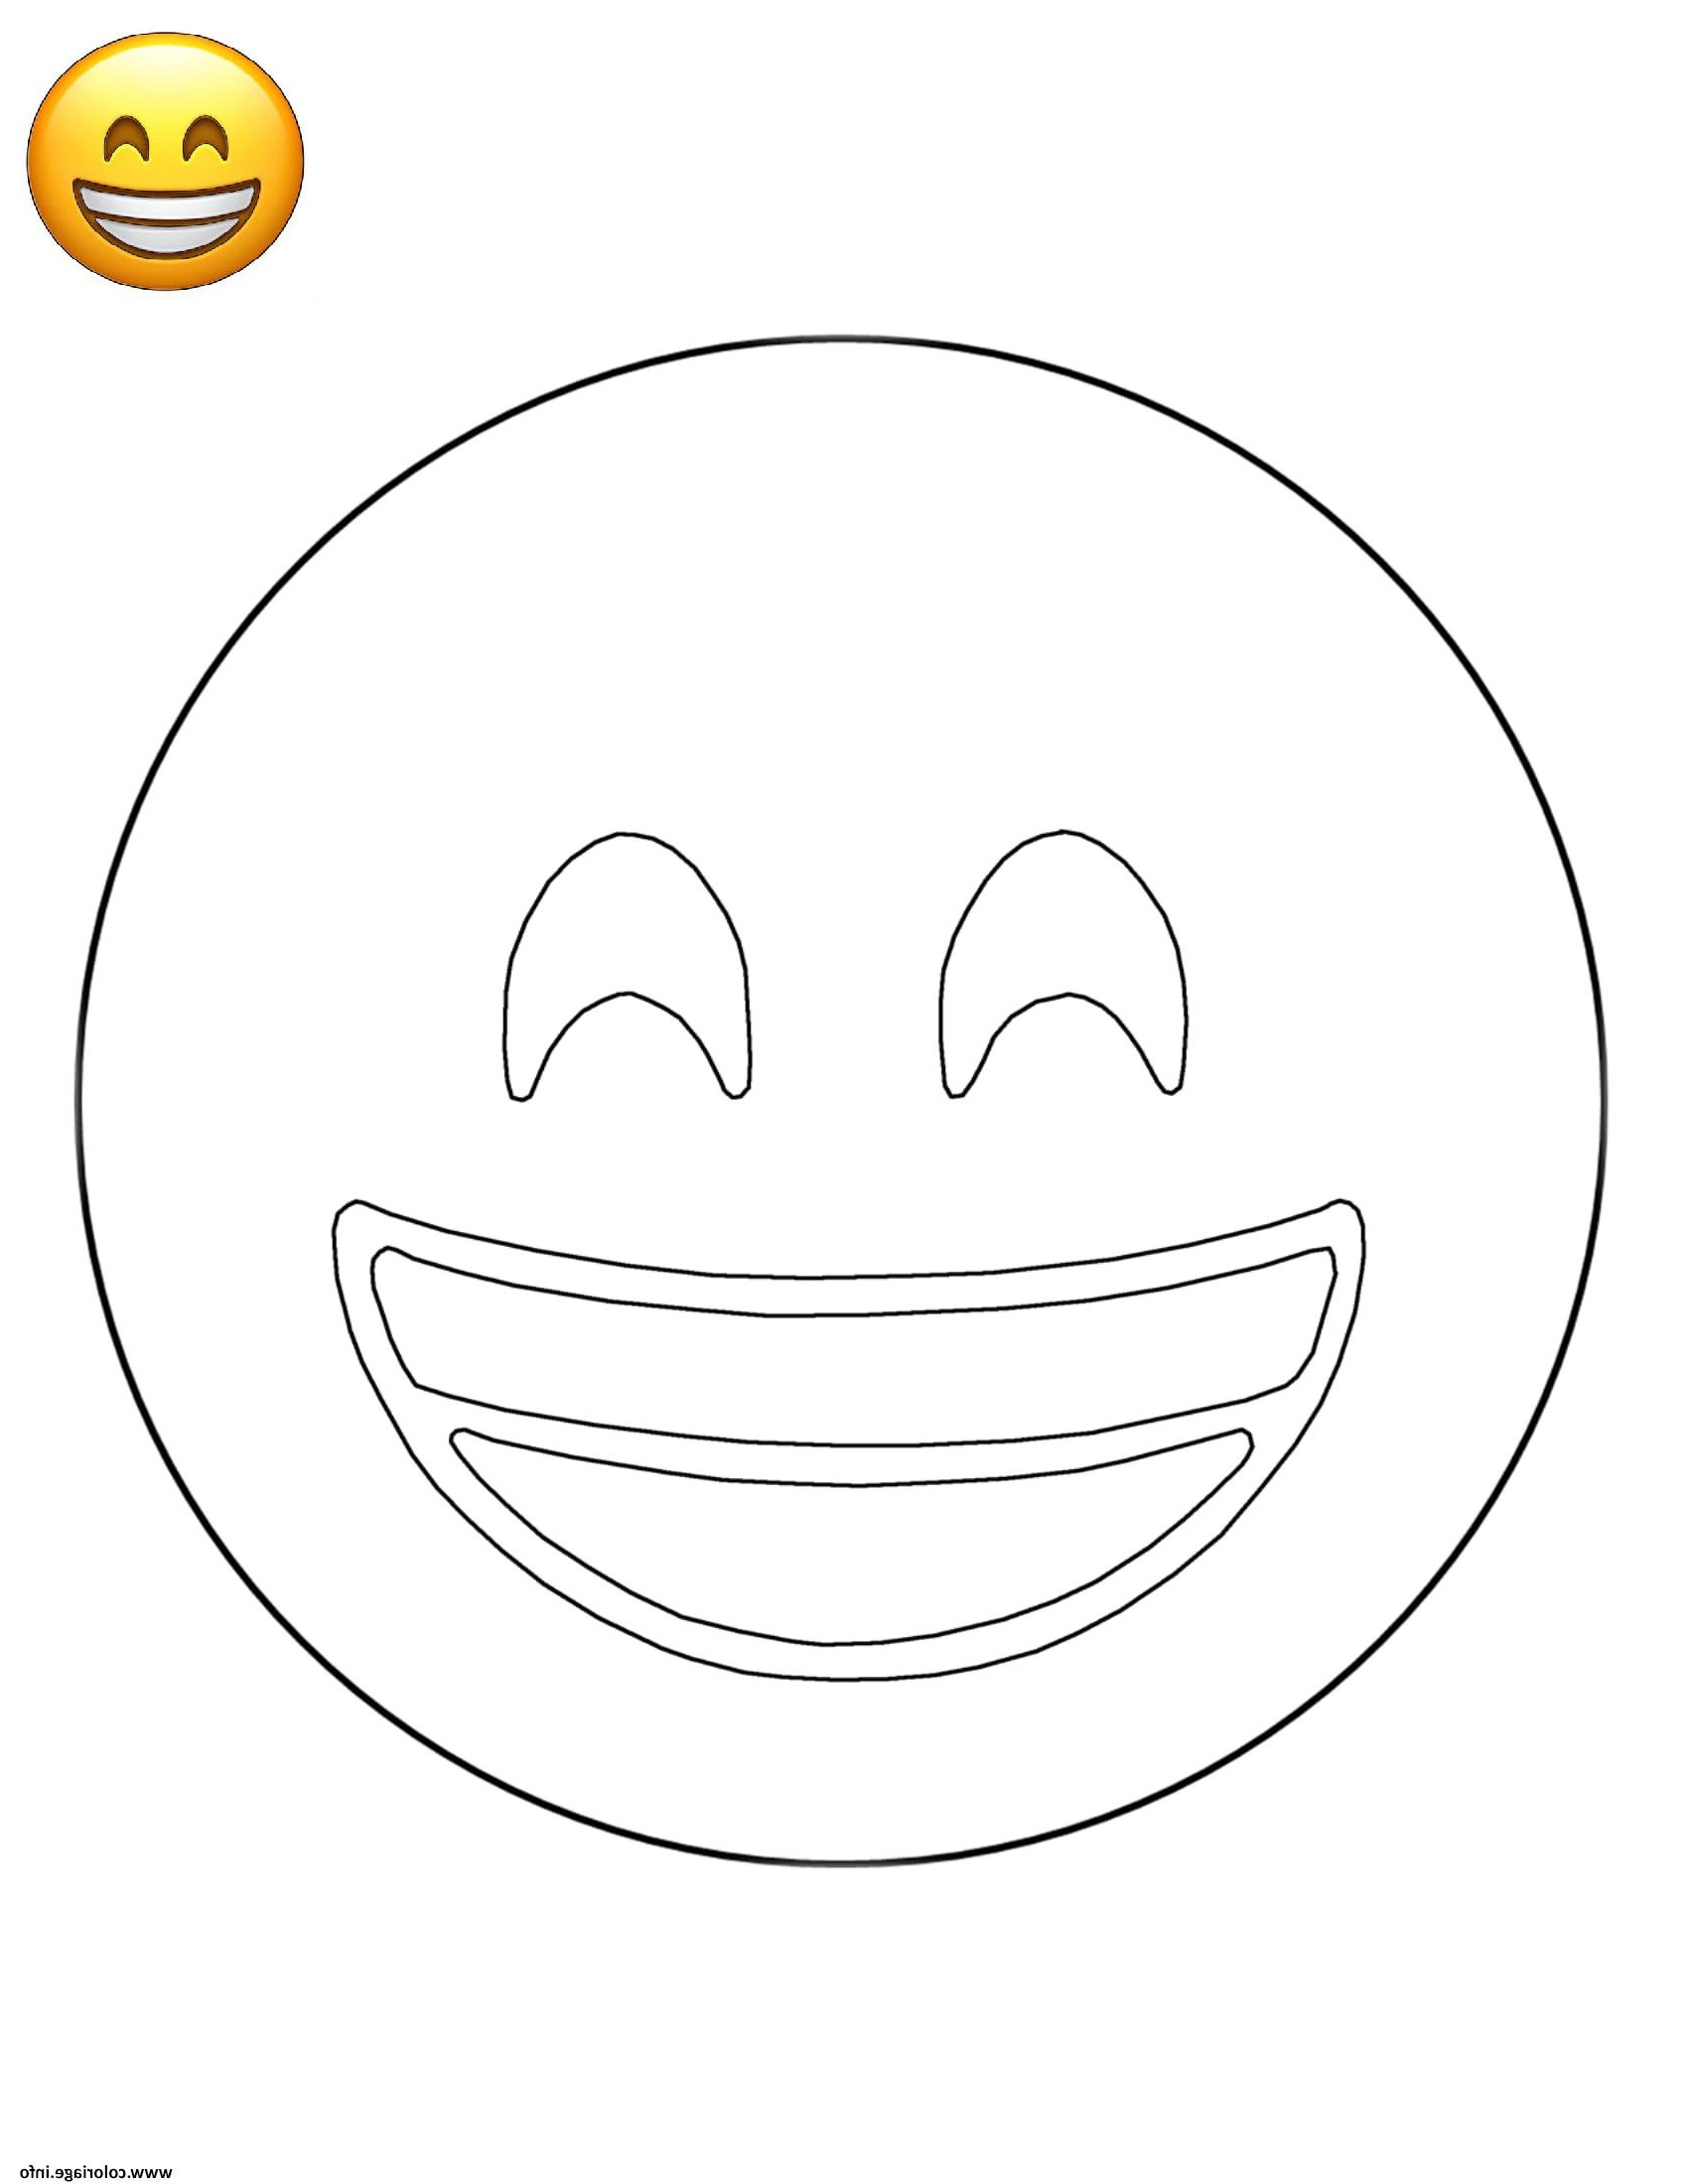 Coloriage Emoji A Imprimer Bestof Photographie Coloriage Emoji Grinning Smile Smiley Jecolorie